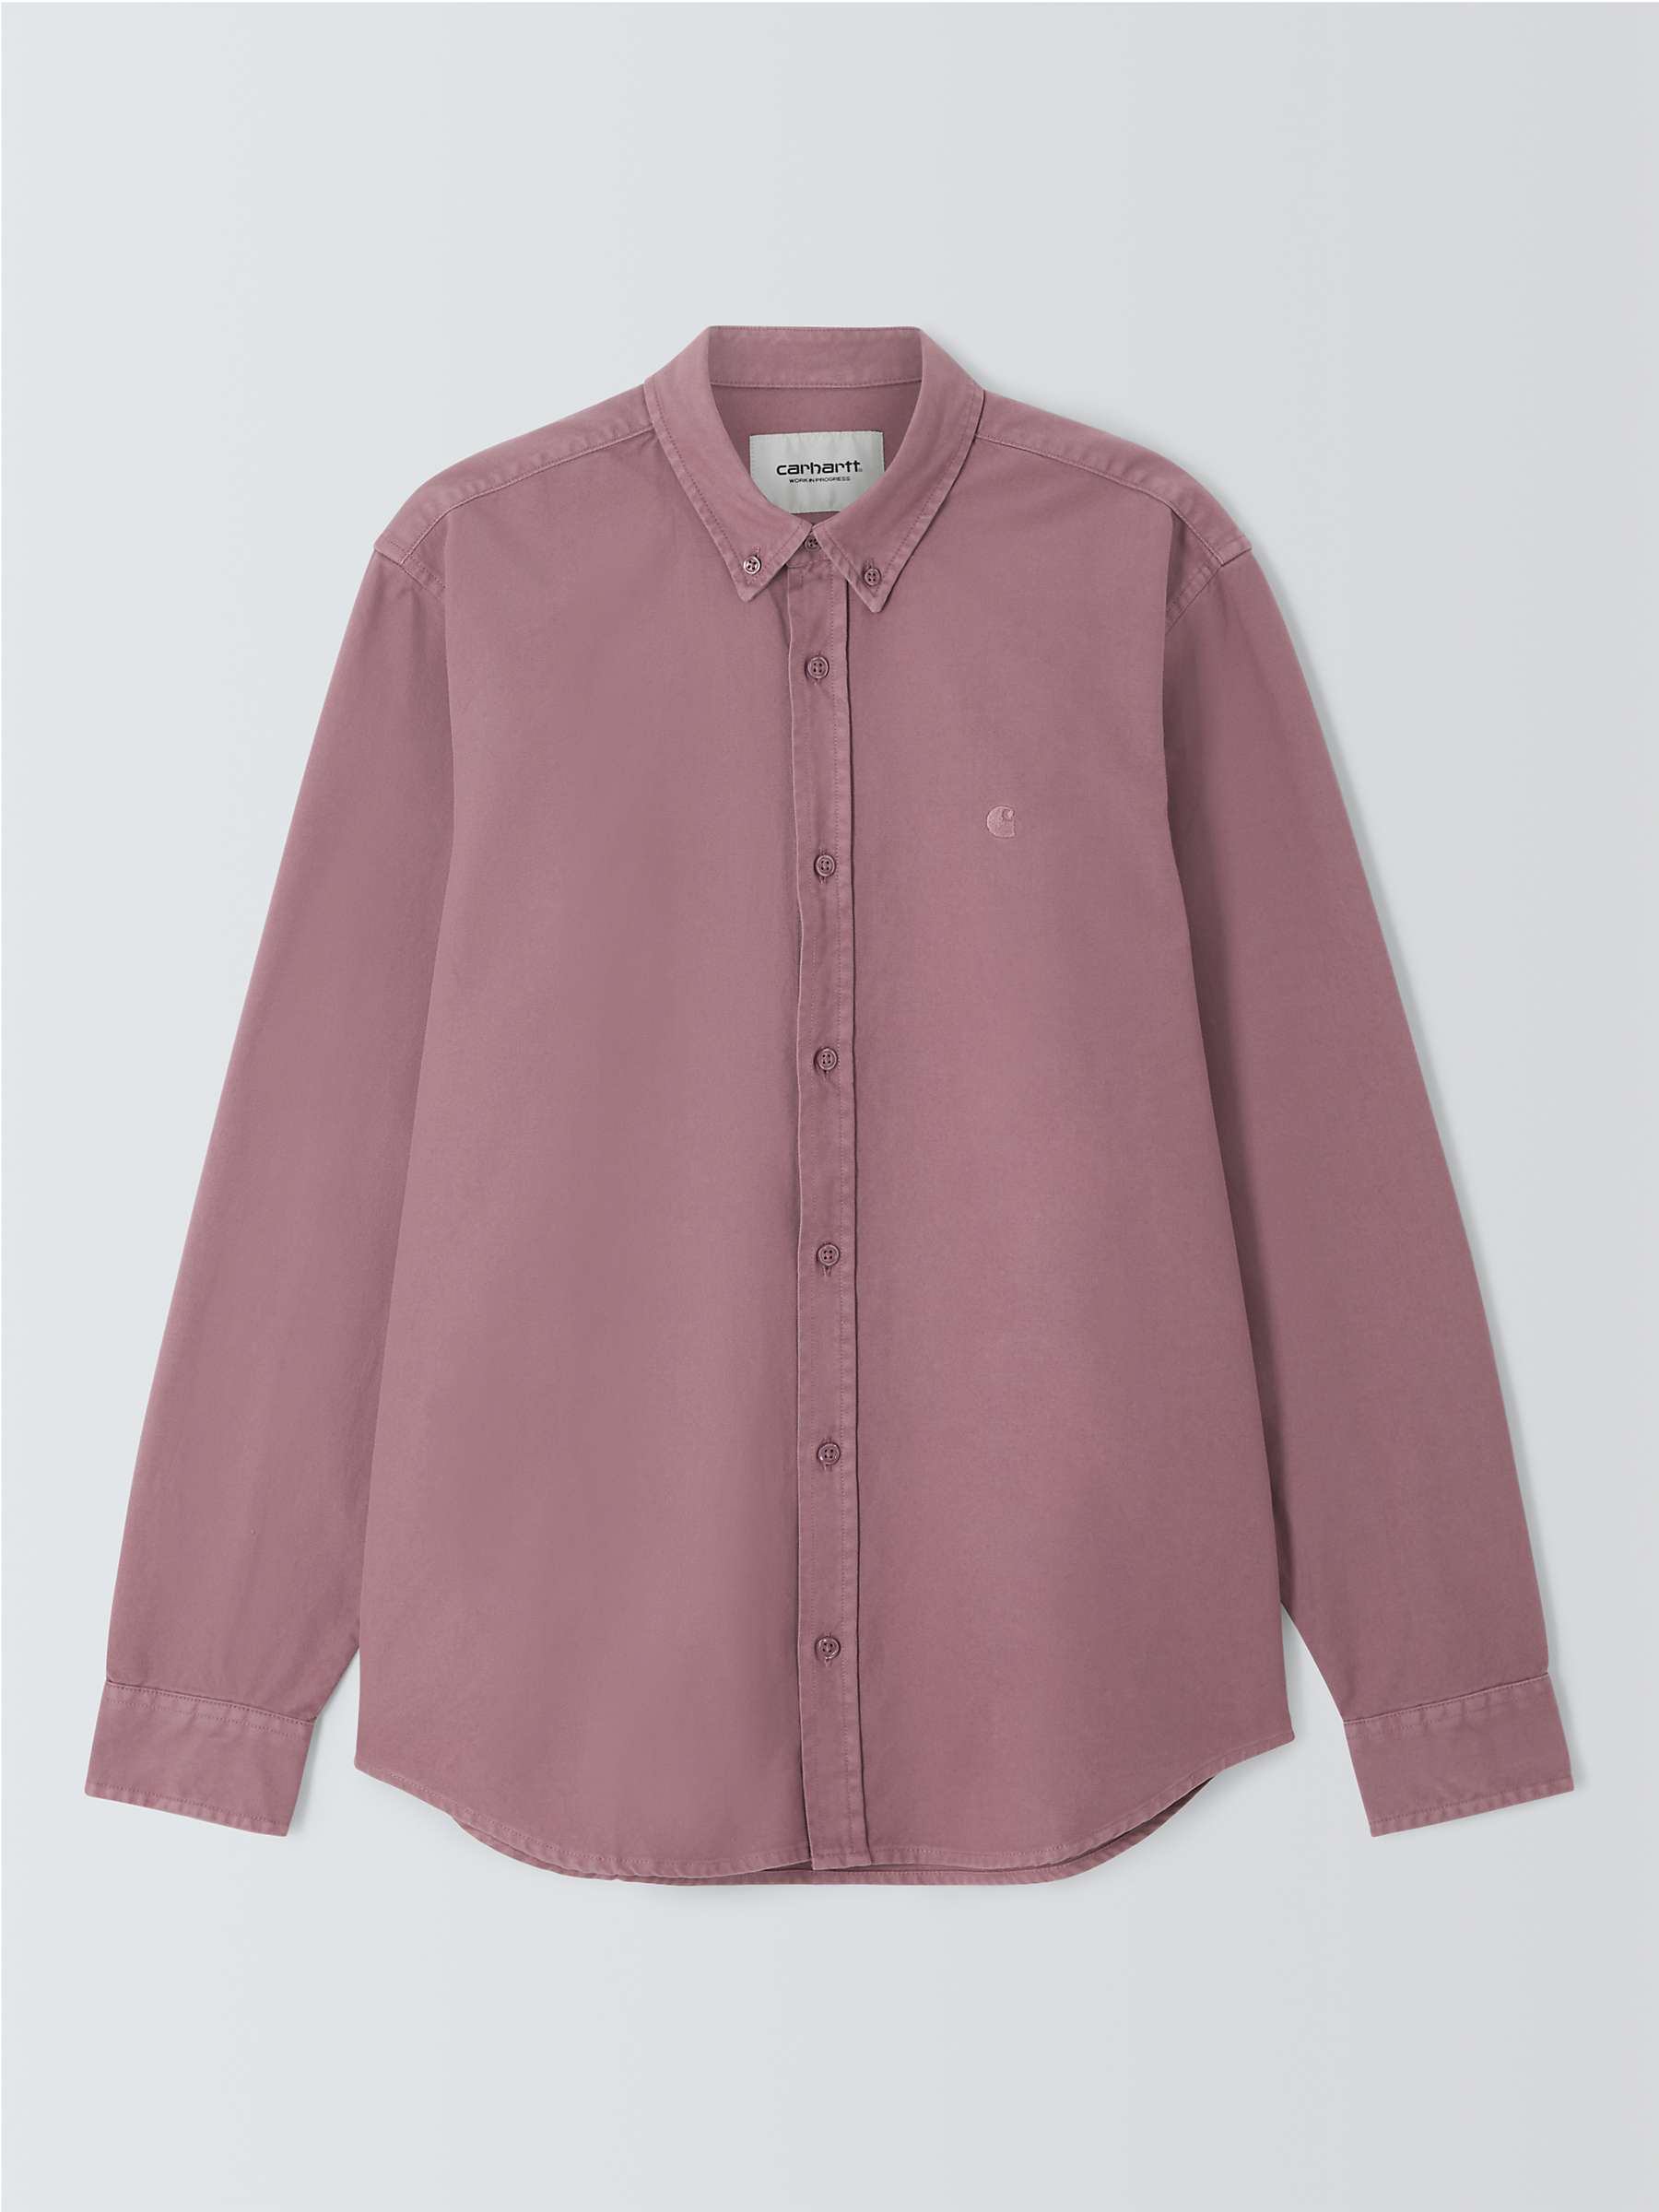 Buy Carhartt WIP Cotton Oxford Shirt, Daphne Online at johnlewis.com